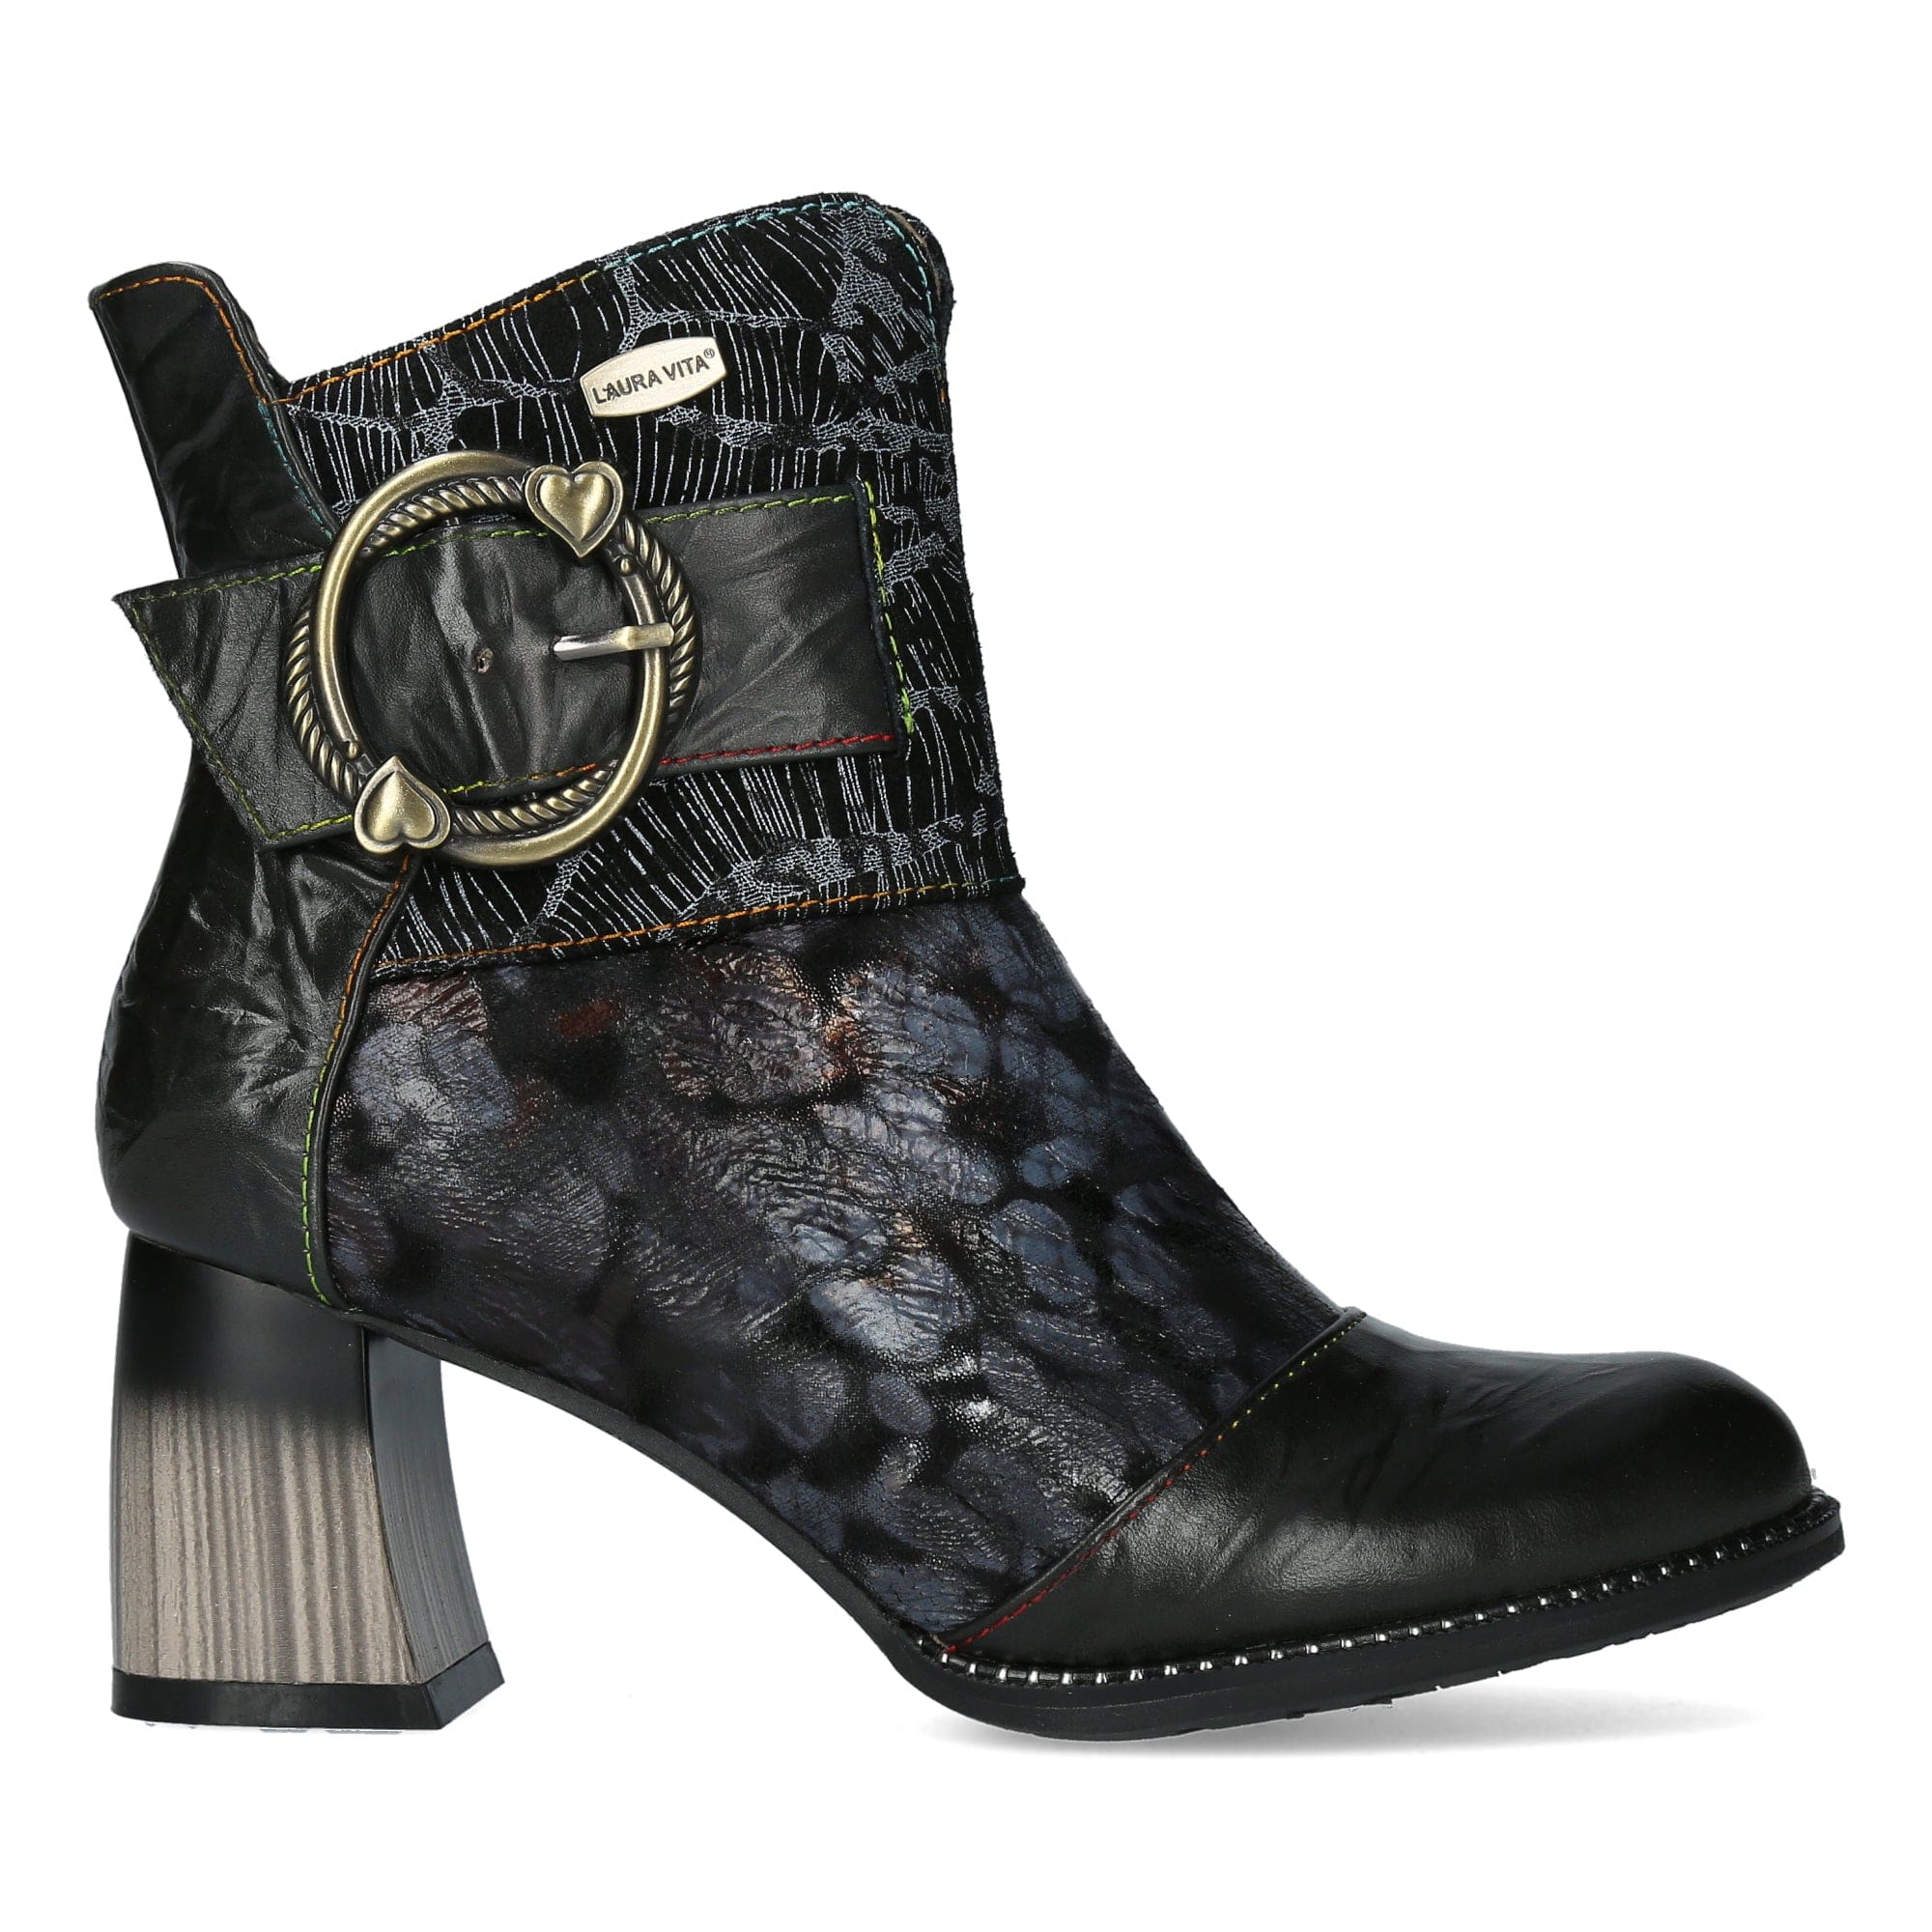 Chaussure IDCORAO 01 - 35 / Noir - Boots